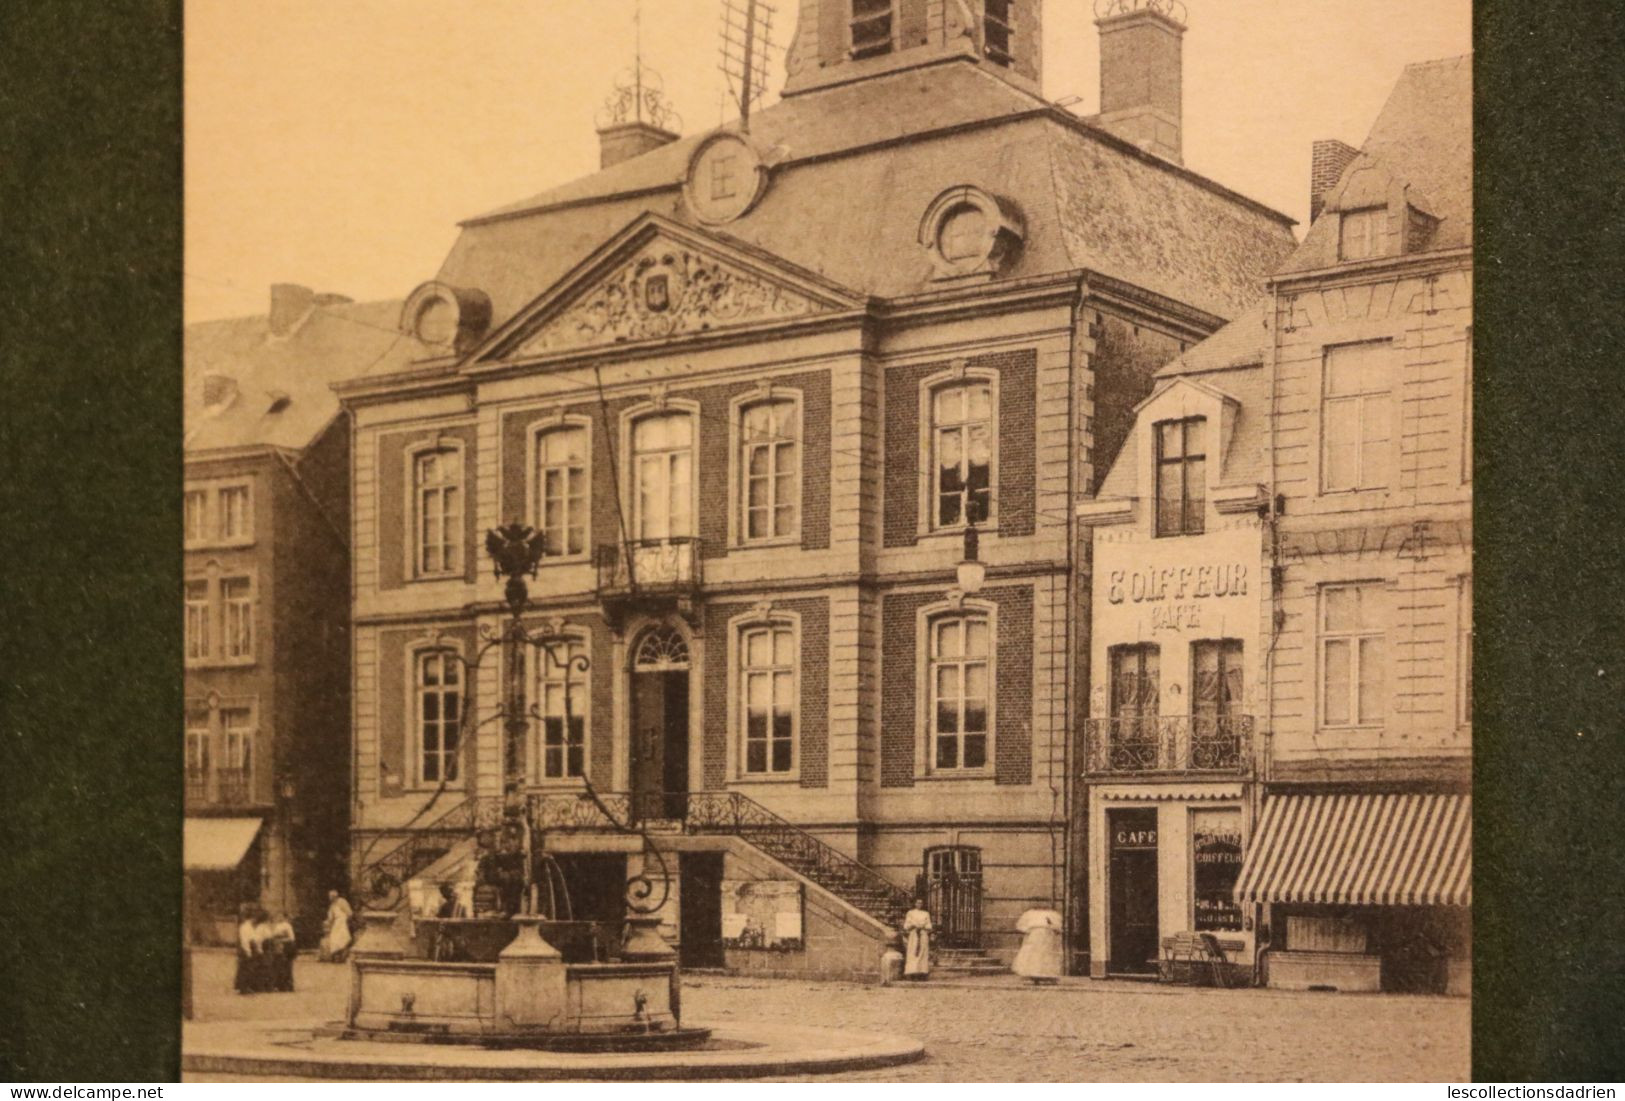 Carte Postale Ancienne - Huy - Hôtel De Ville - Huy